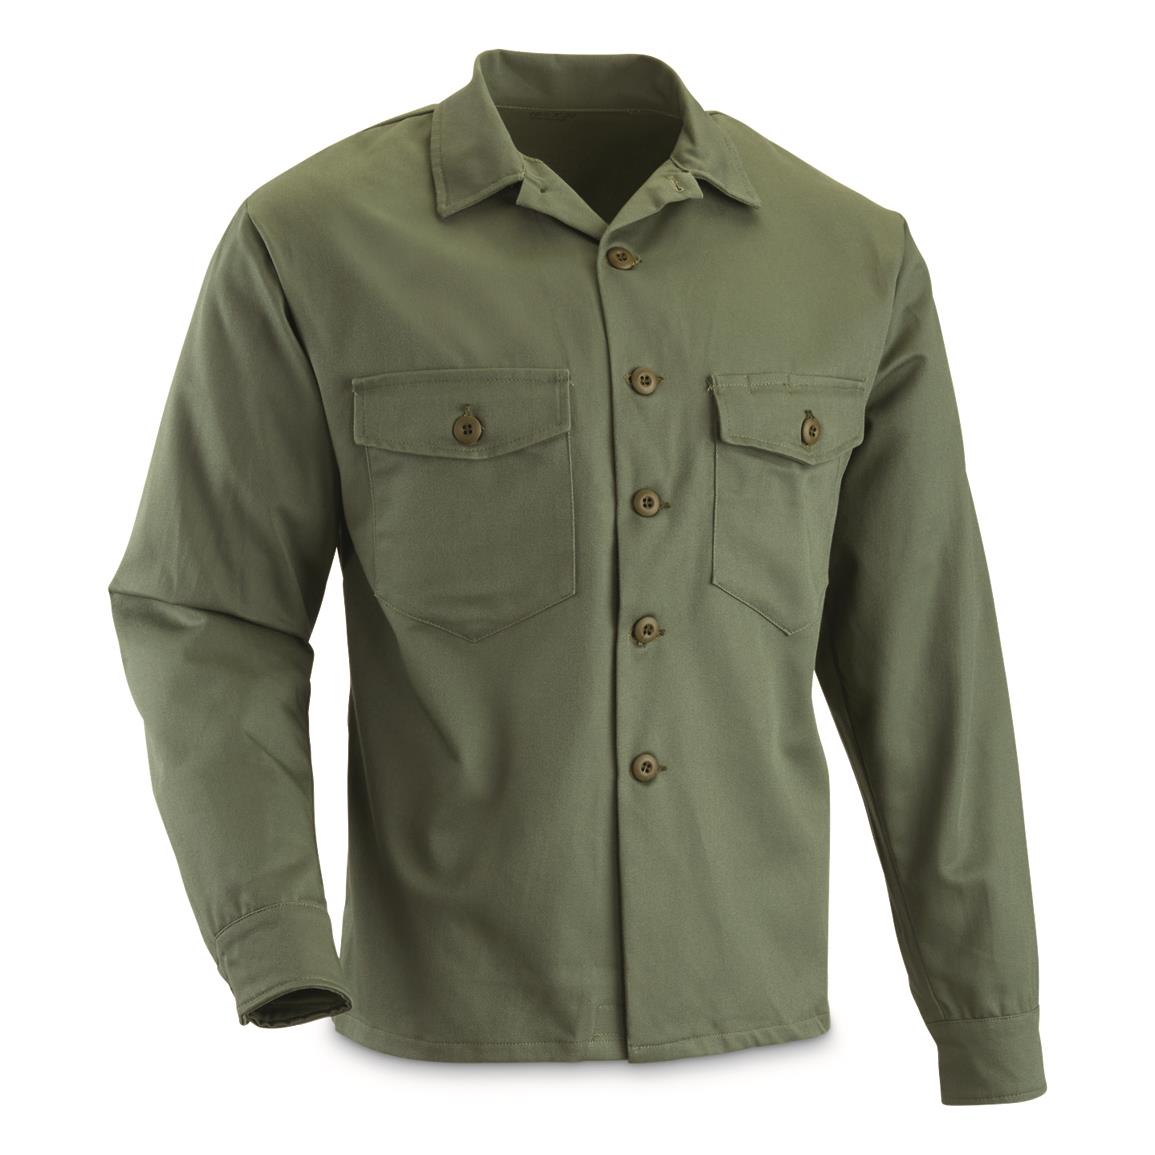 U.S. Military Surplus Cotton Sateen Field Shirt, New, Olive Drab